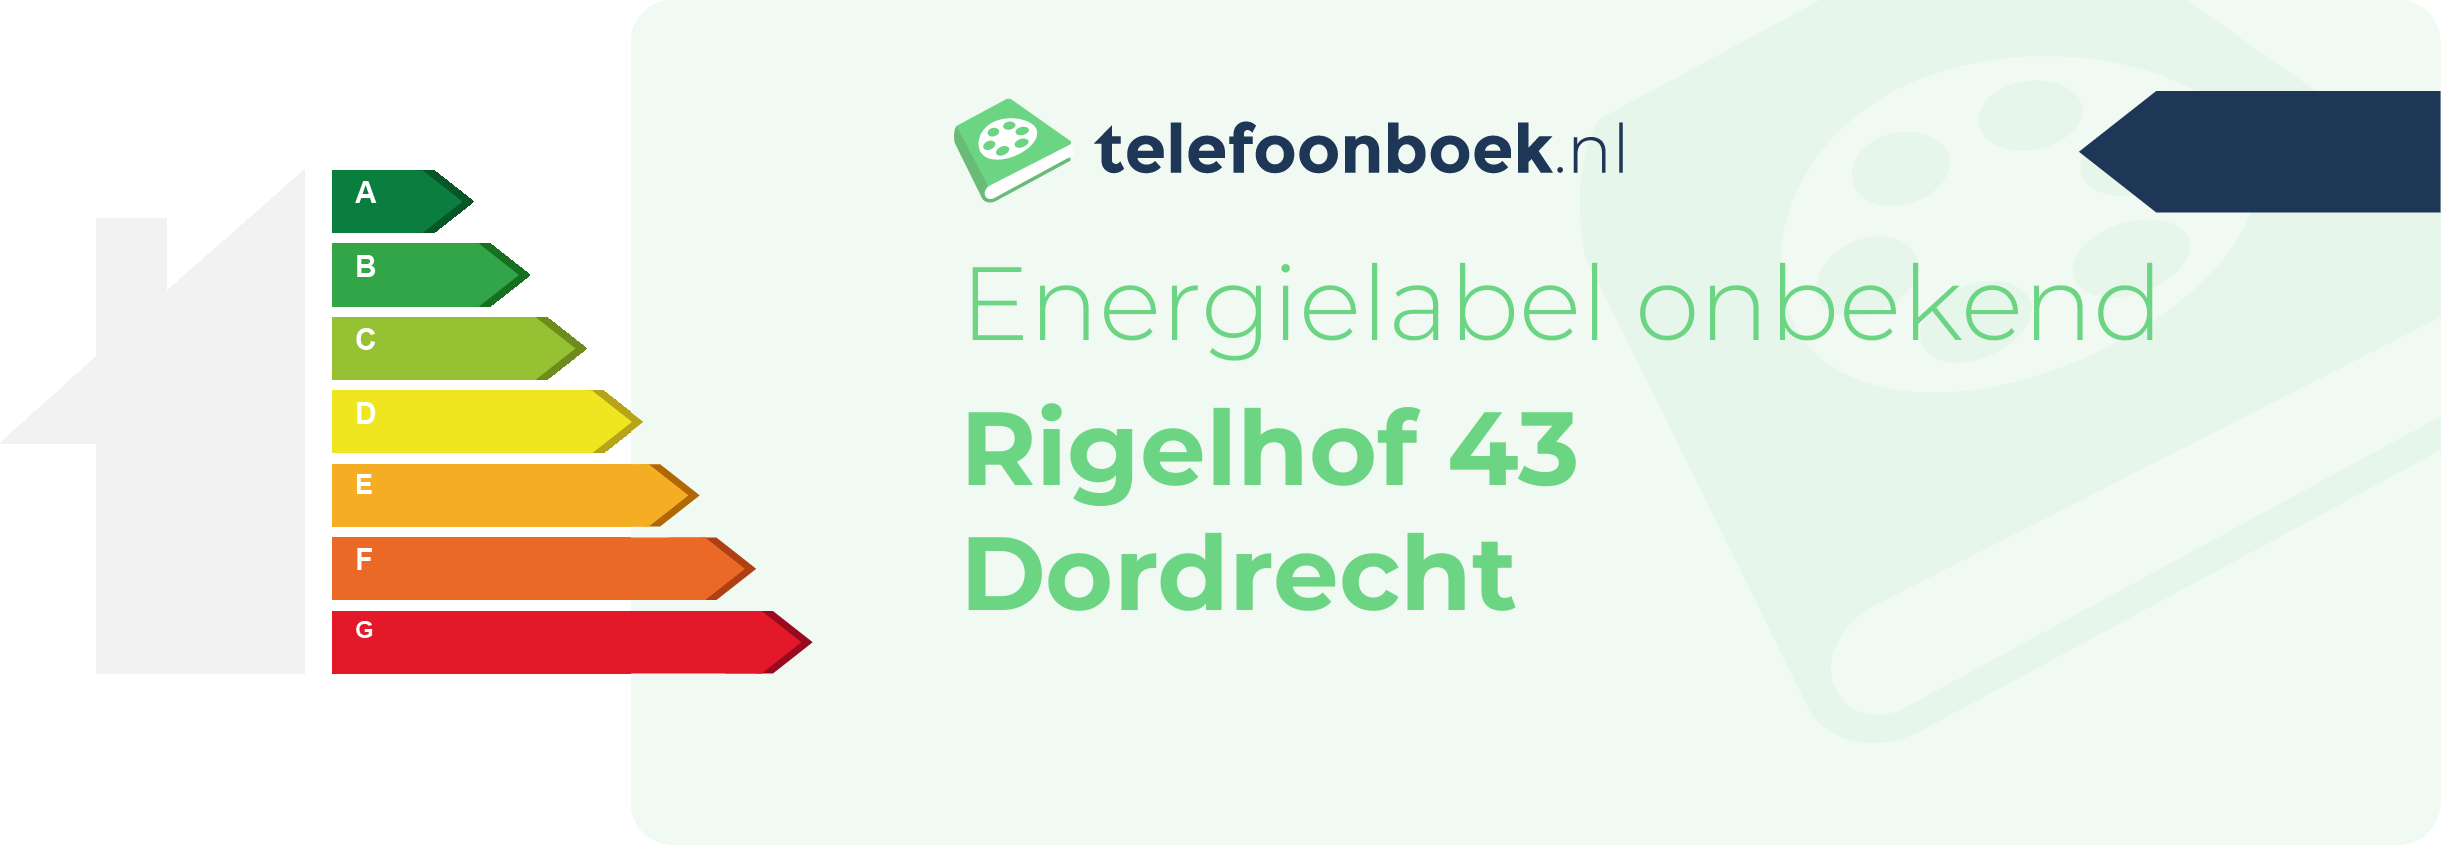 Energielabel Rigelhof 43 Dordrecht